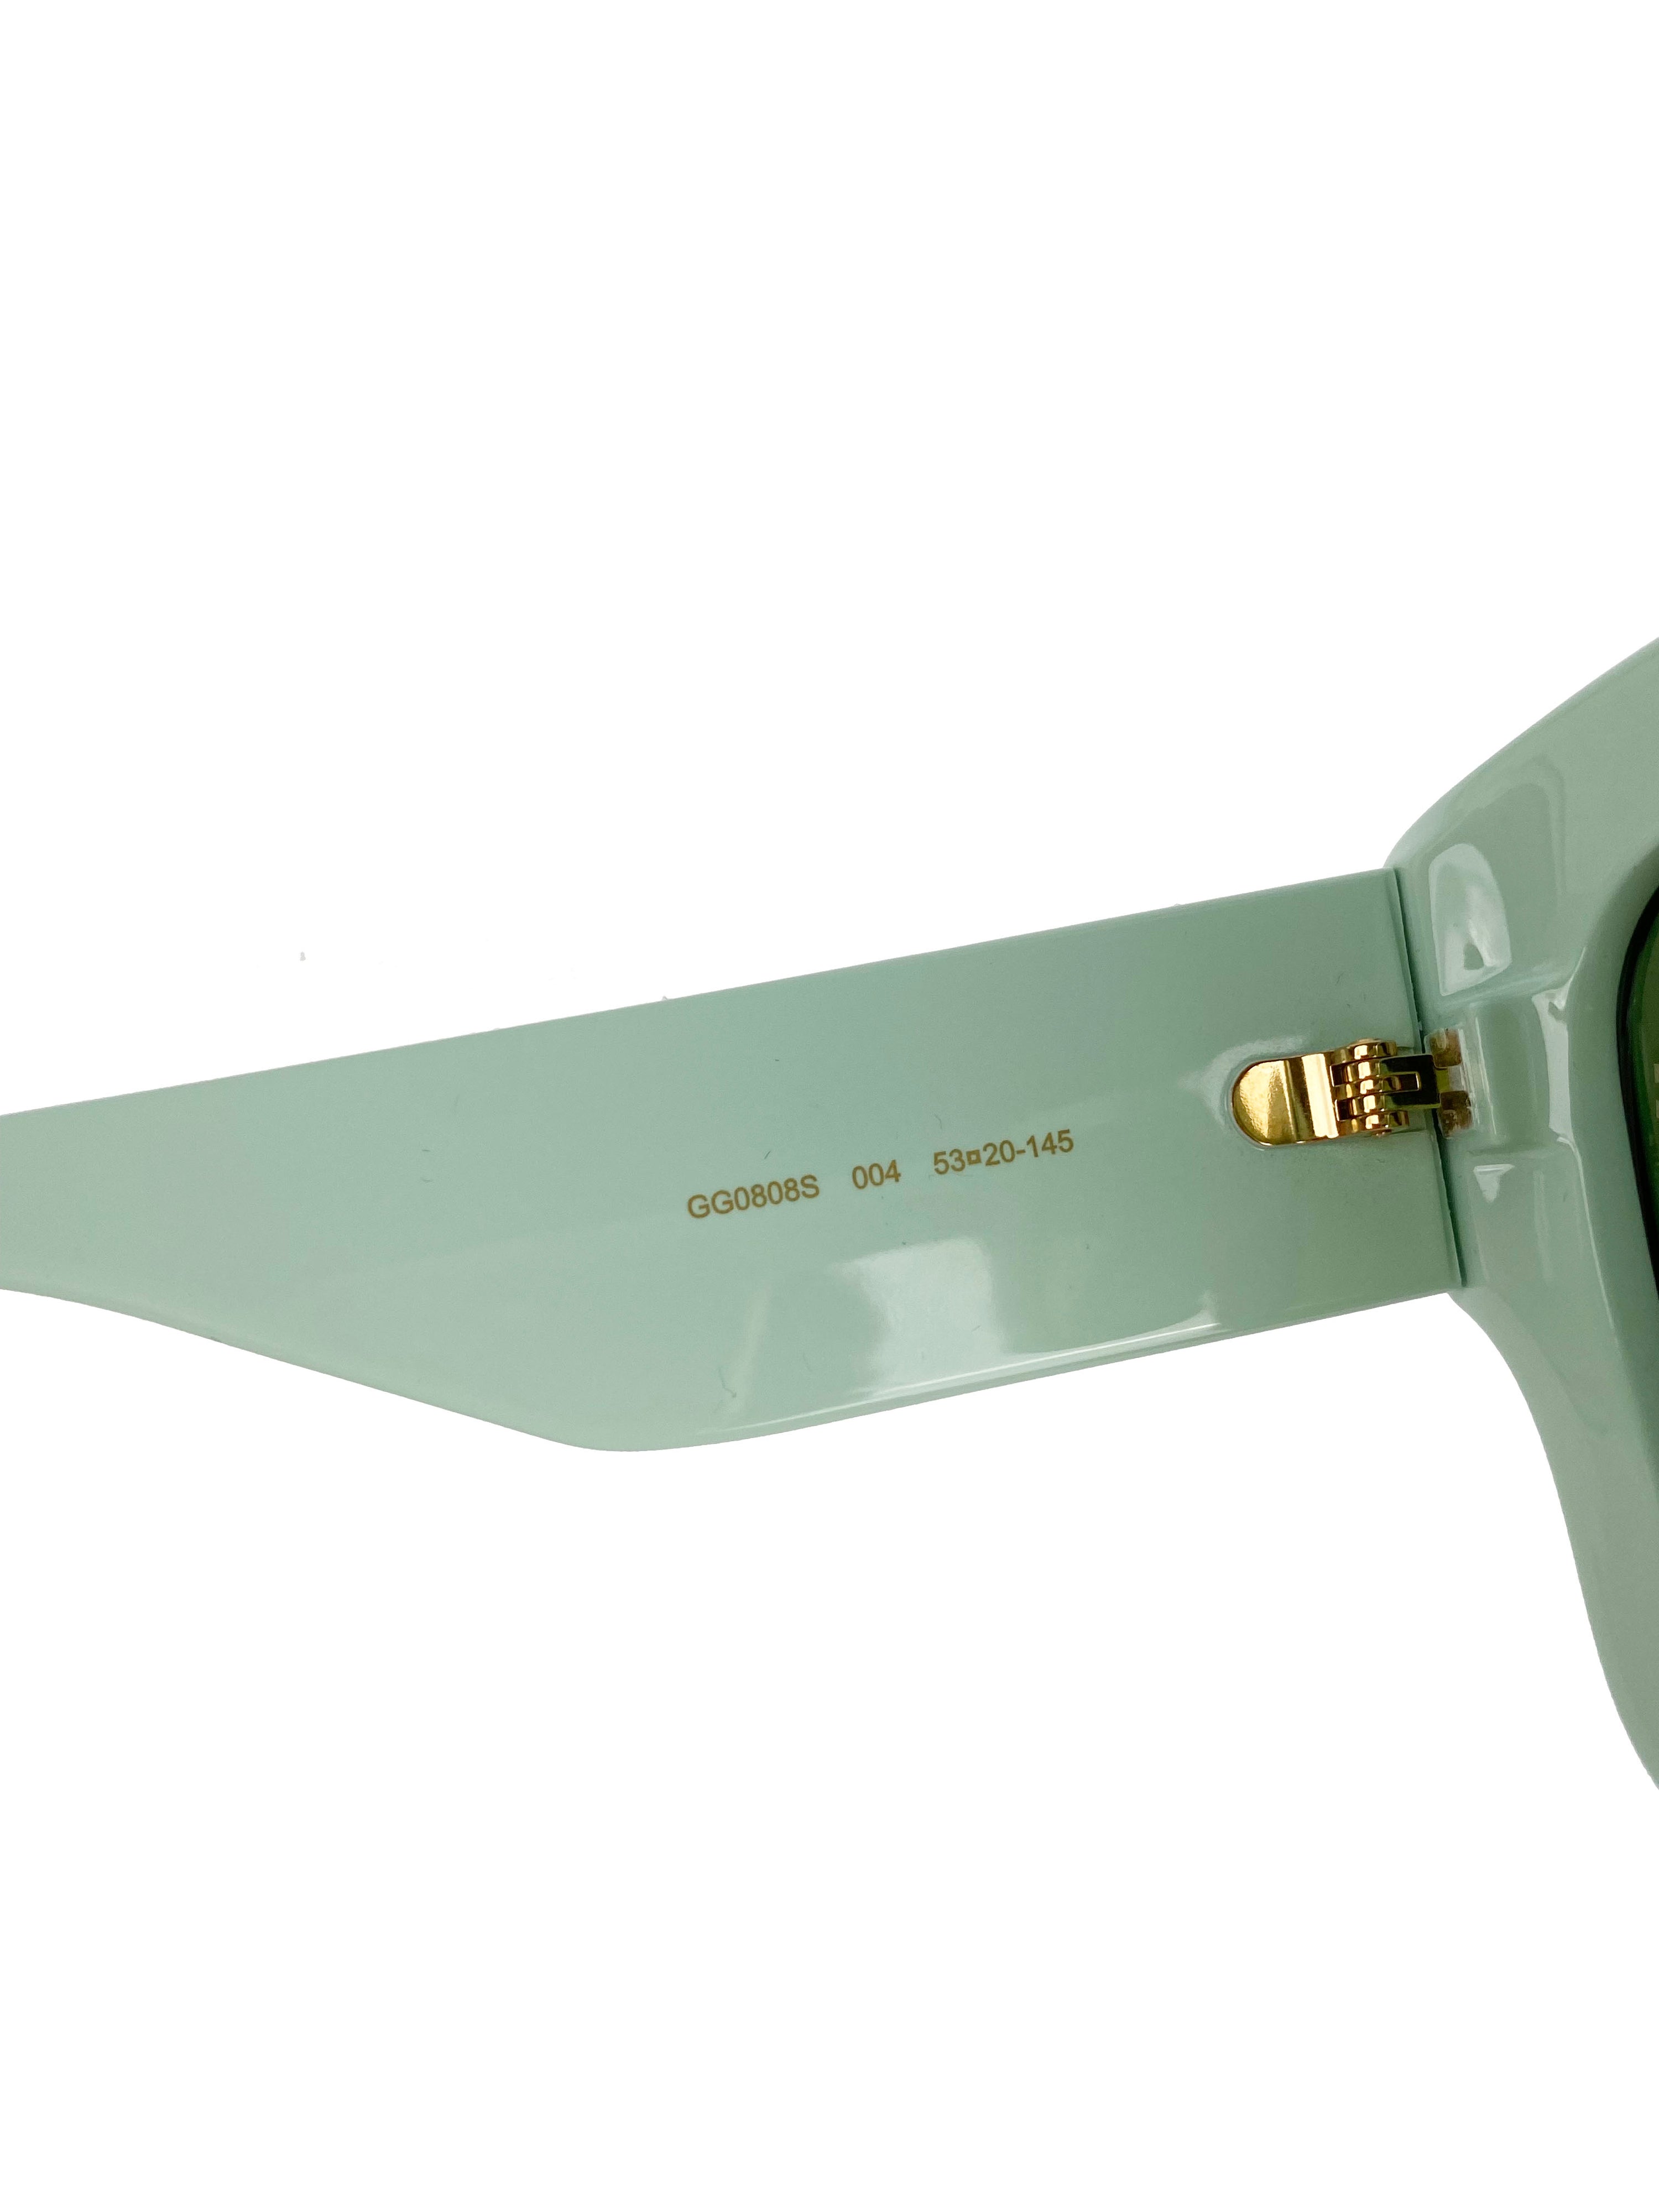 Gucci Mint Green Cat Eye Sunglasses GG0808S